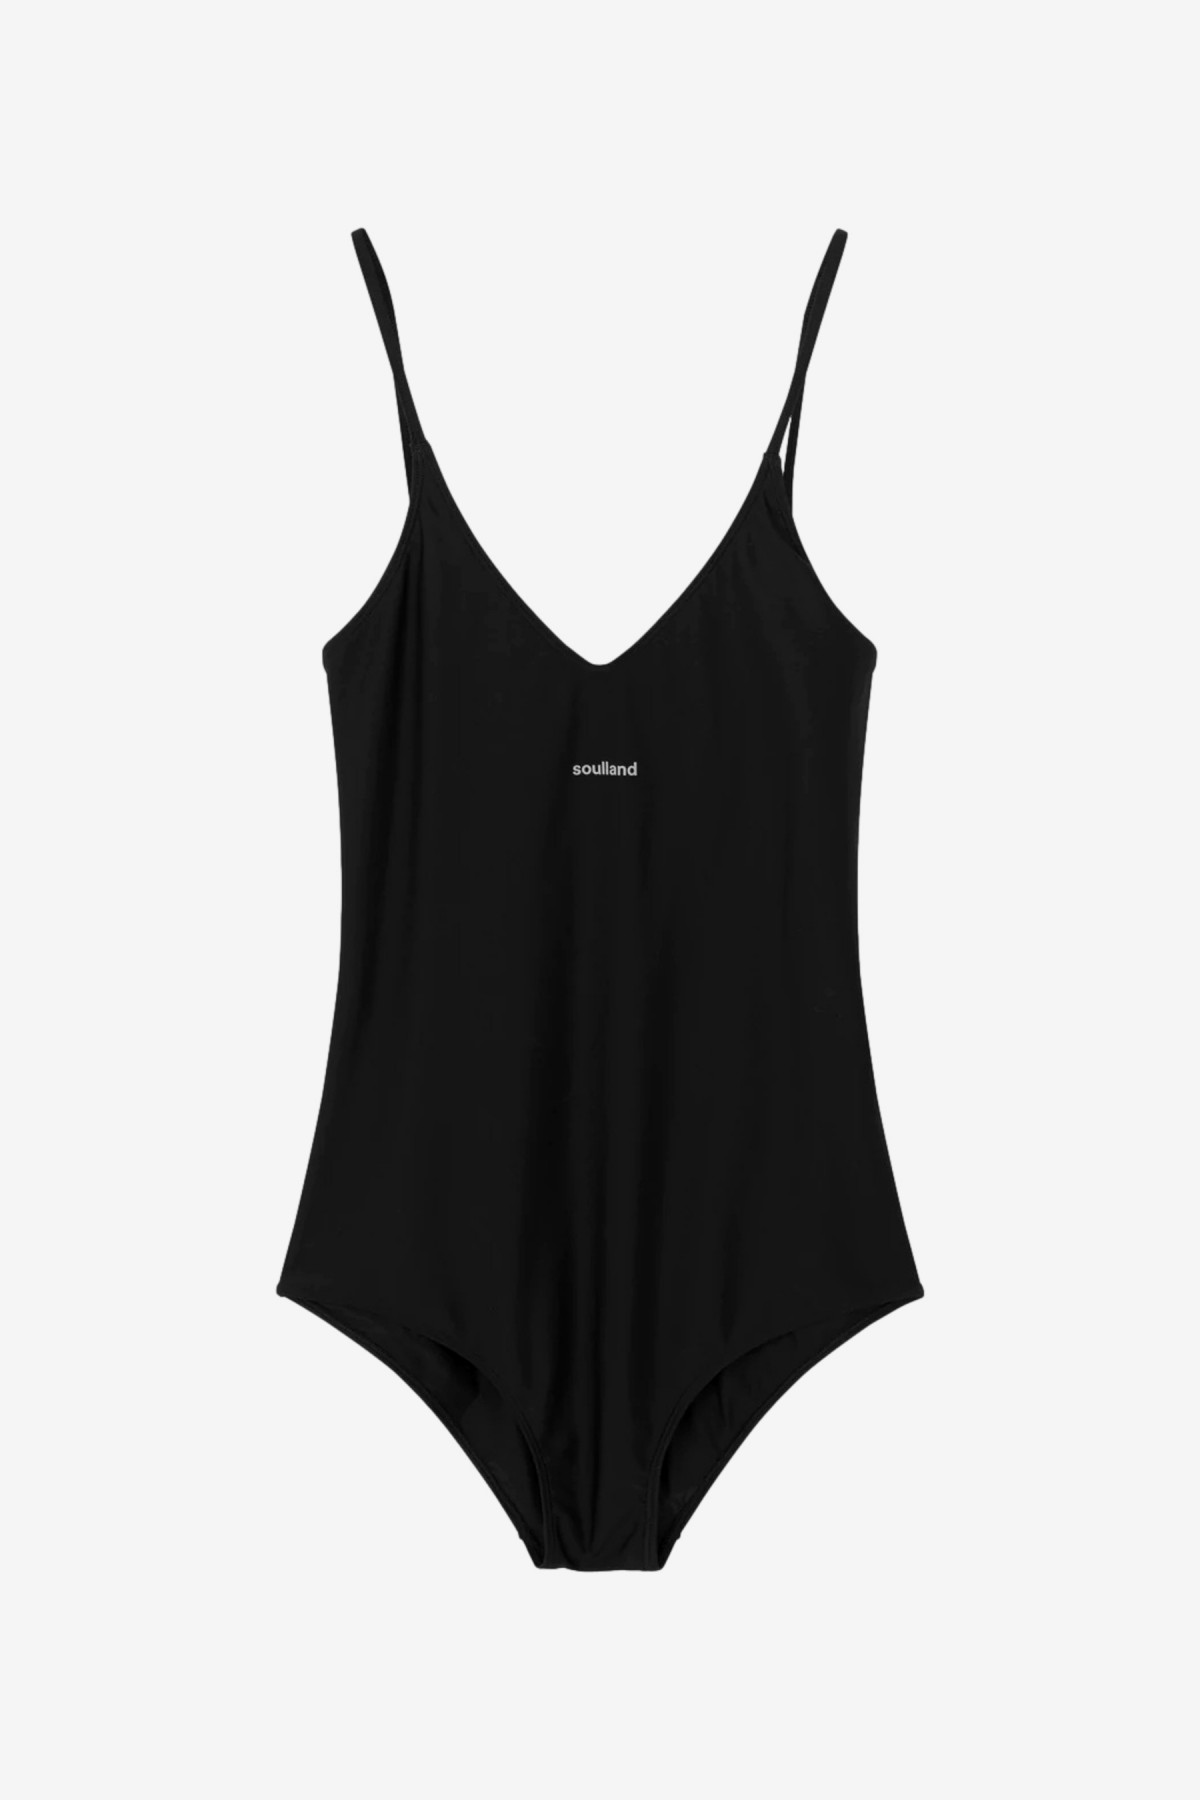 Soulland Adel Swimsuit in Black